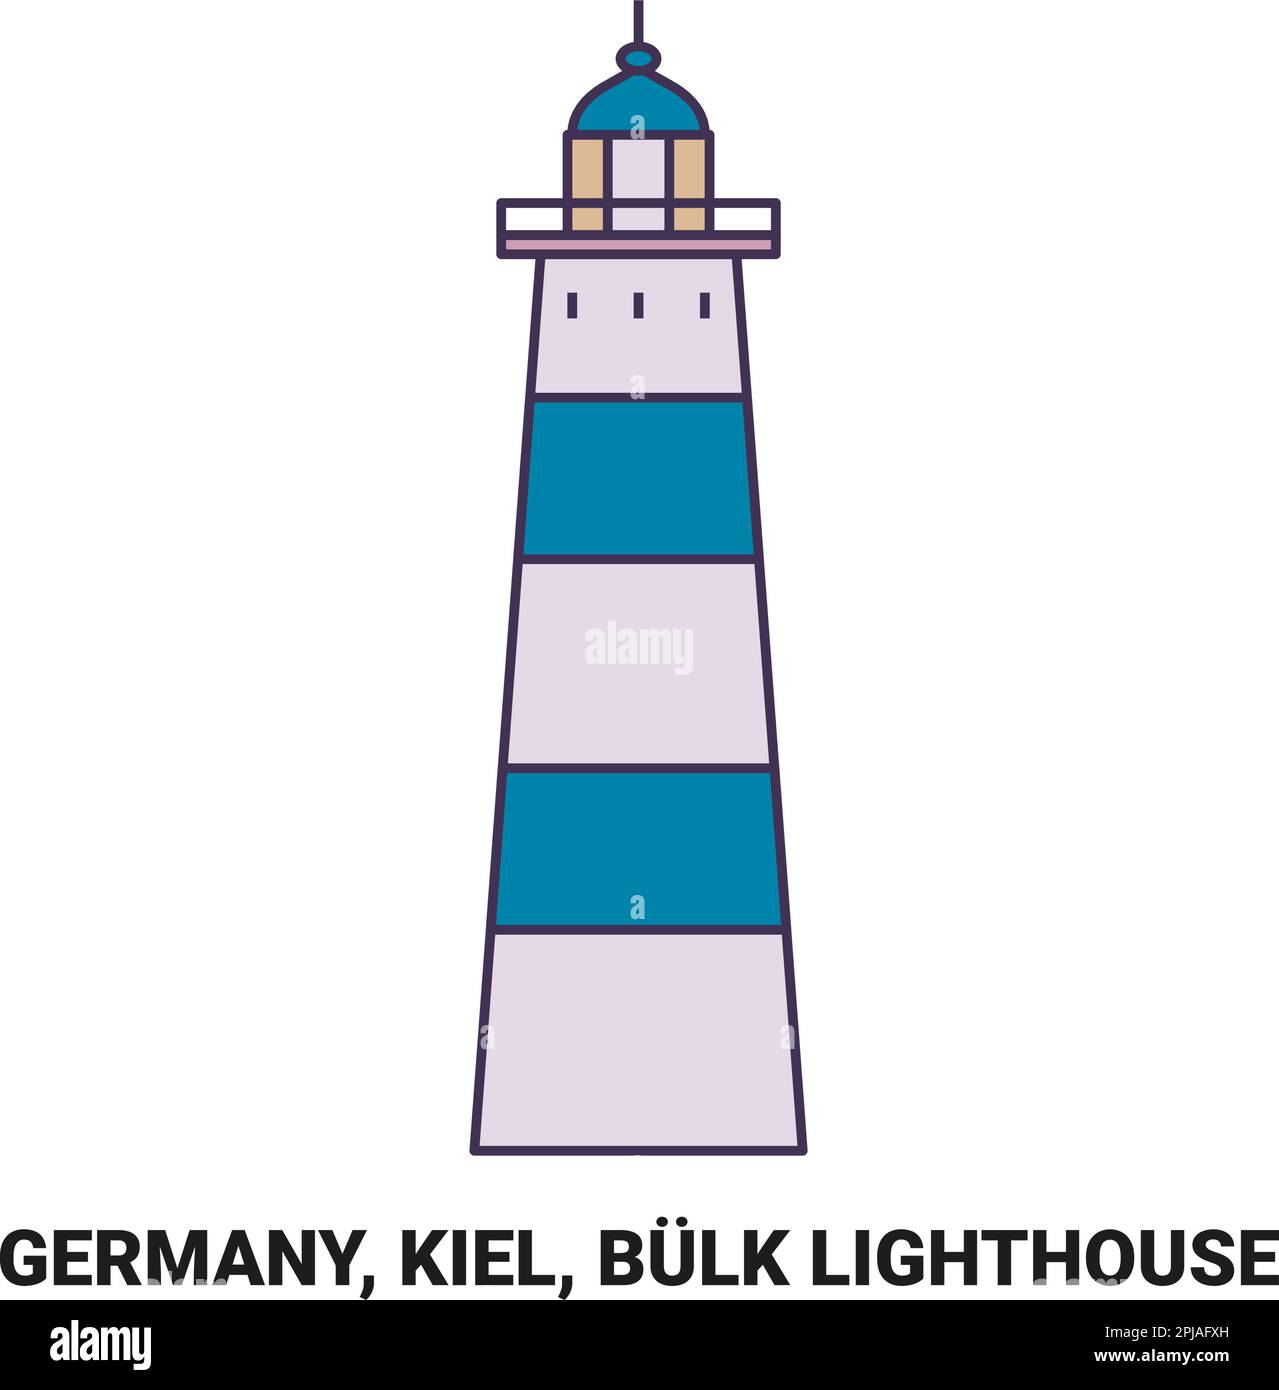 Germany, Kiel, Bulk Lighthouse travel landmark vector illustration Stock Vector